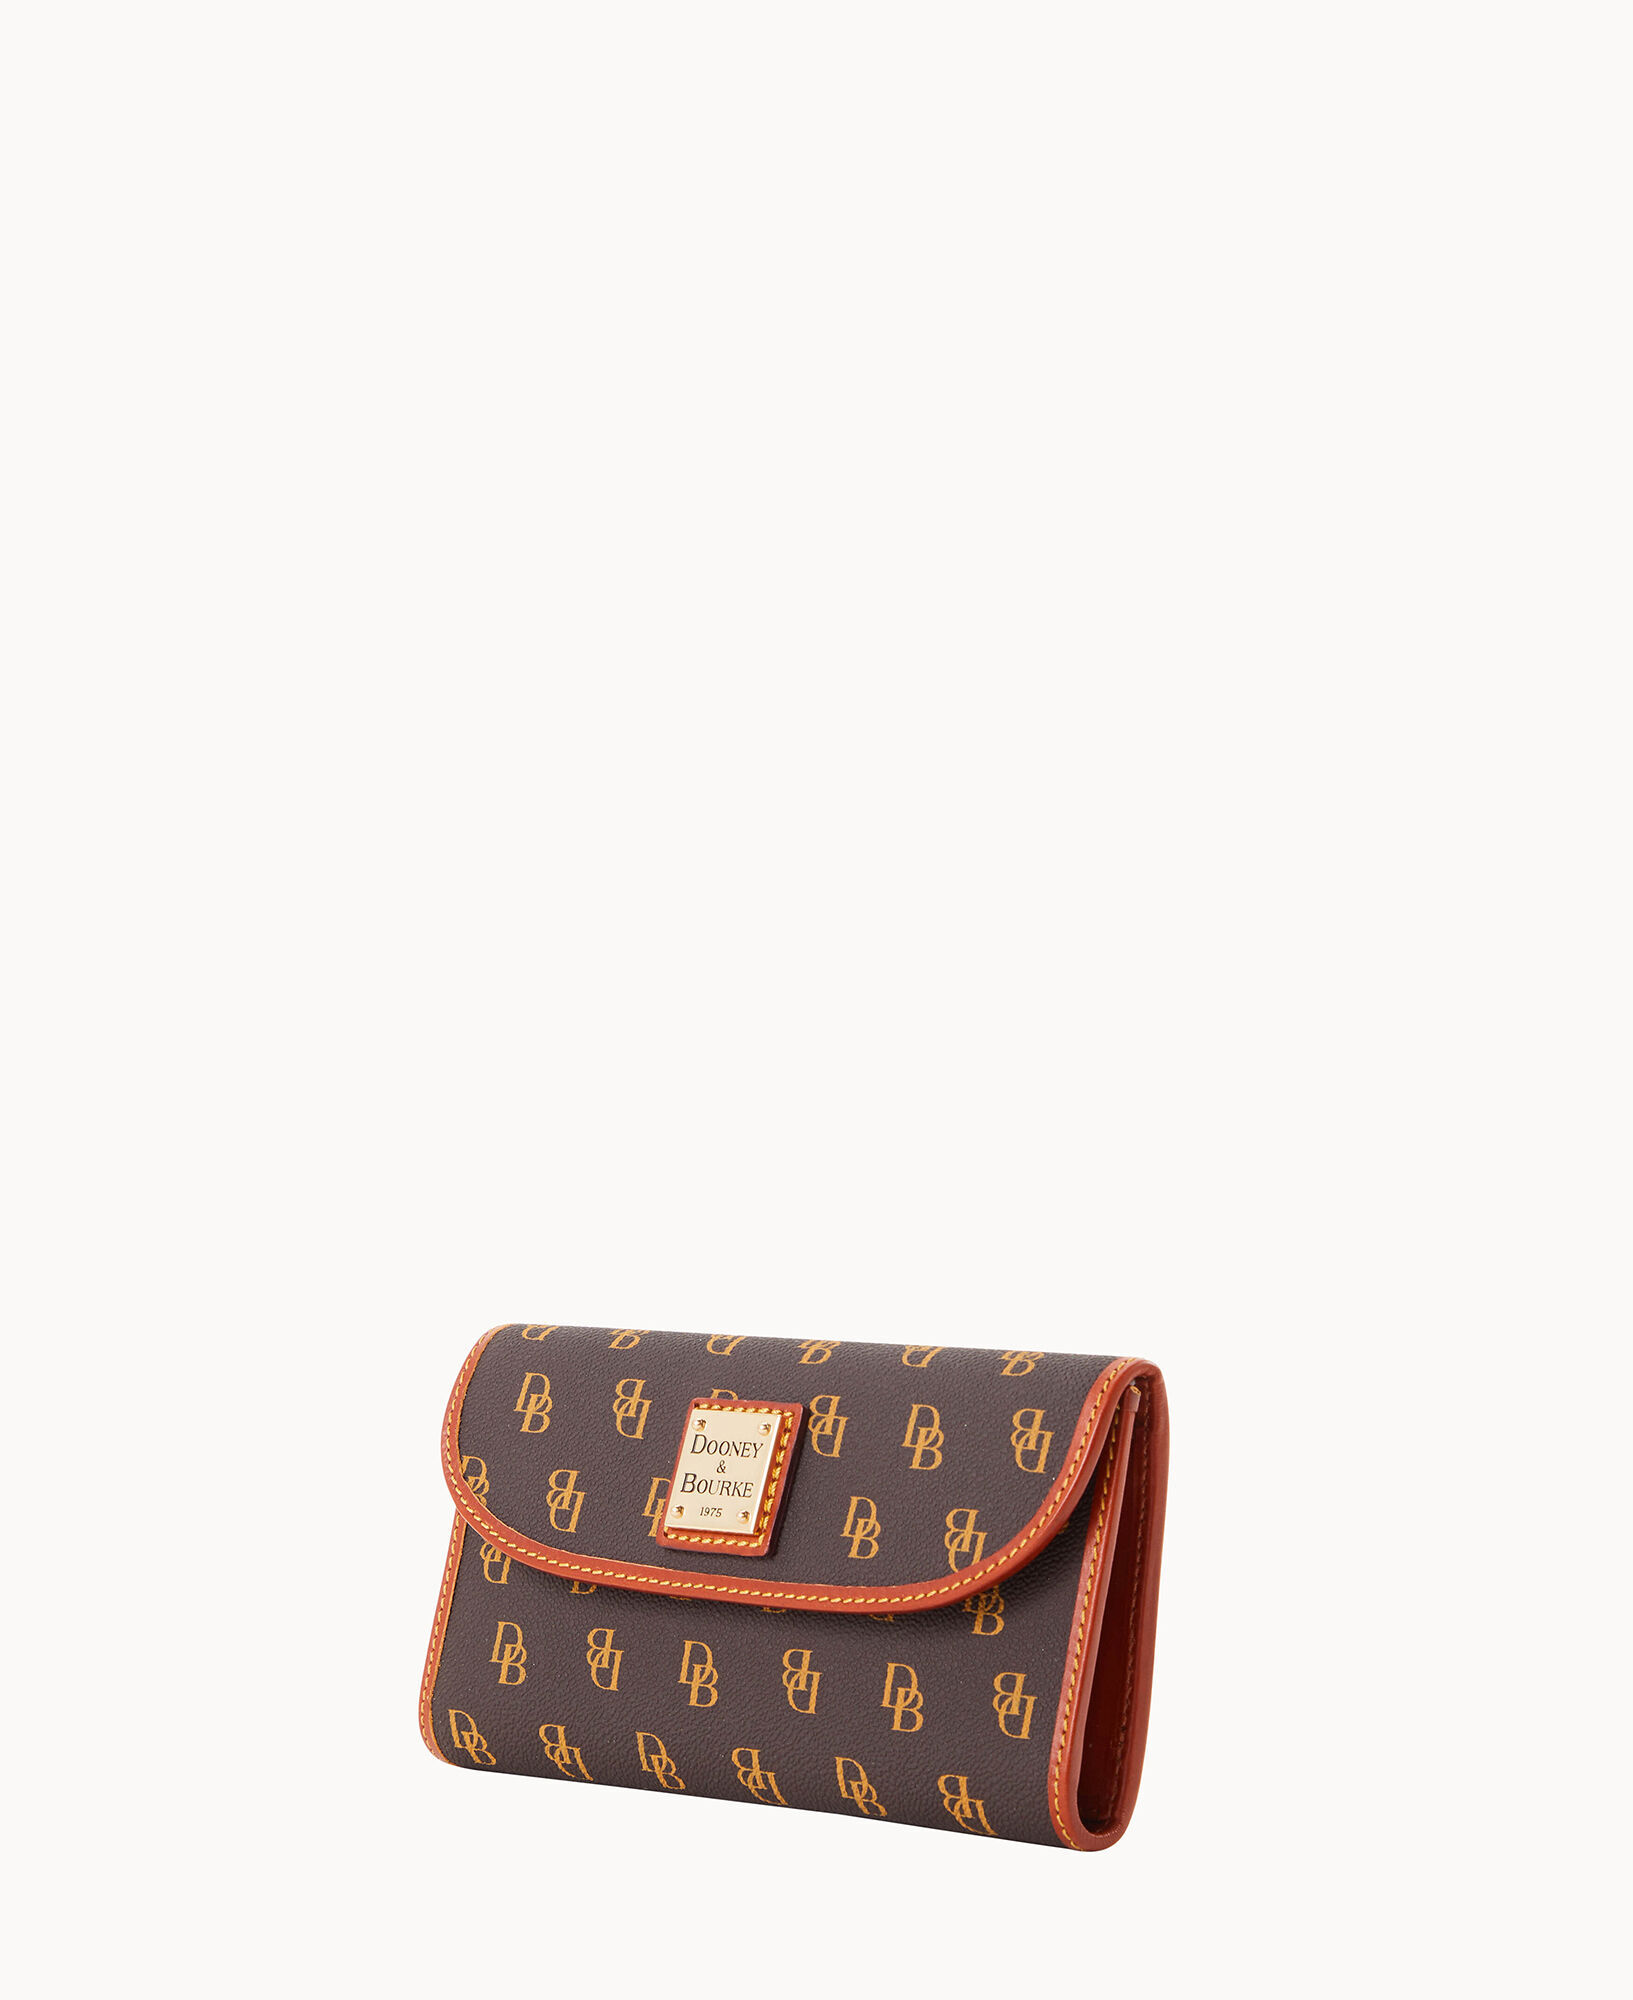 Louis Vuitton Airplane Bag For Salem